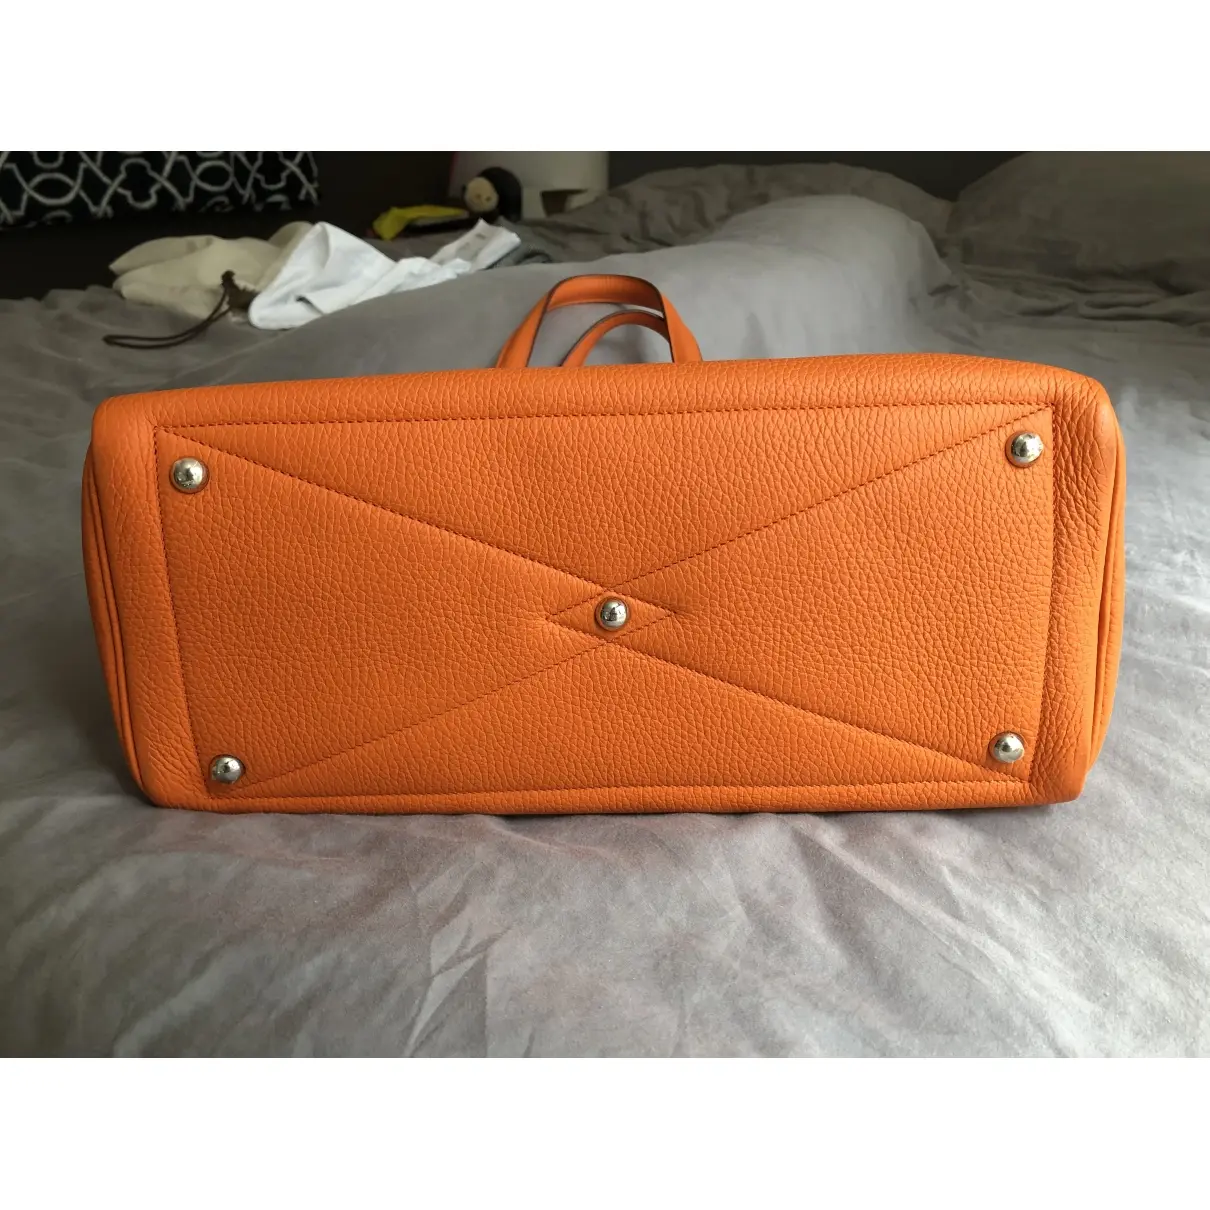 Buy Hermès Victoria leather handbag online